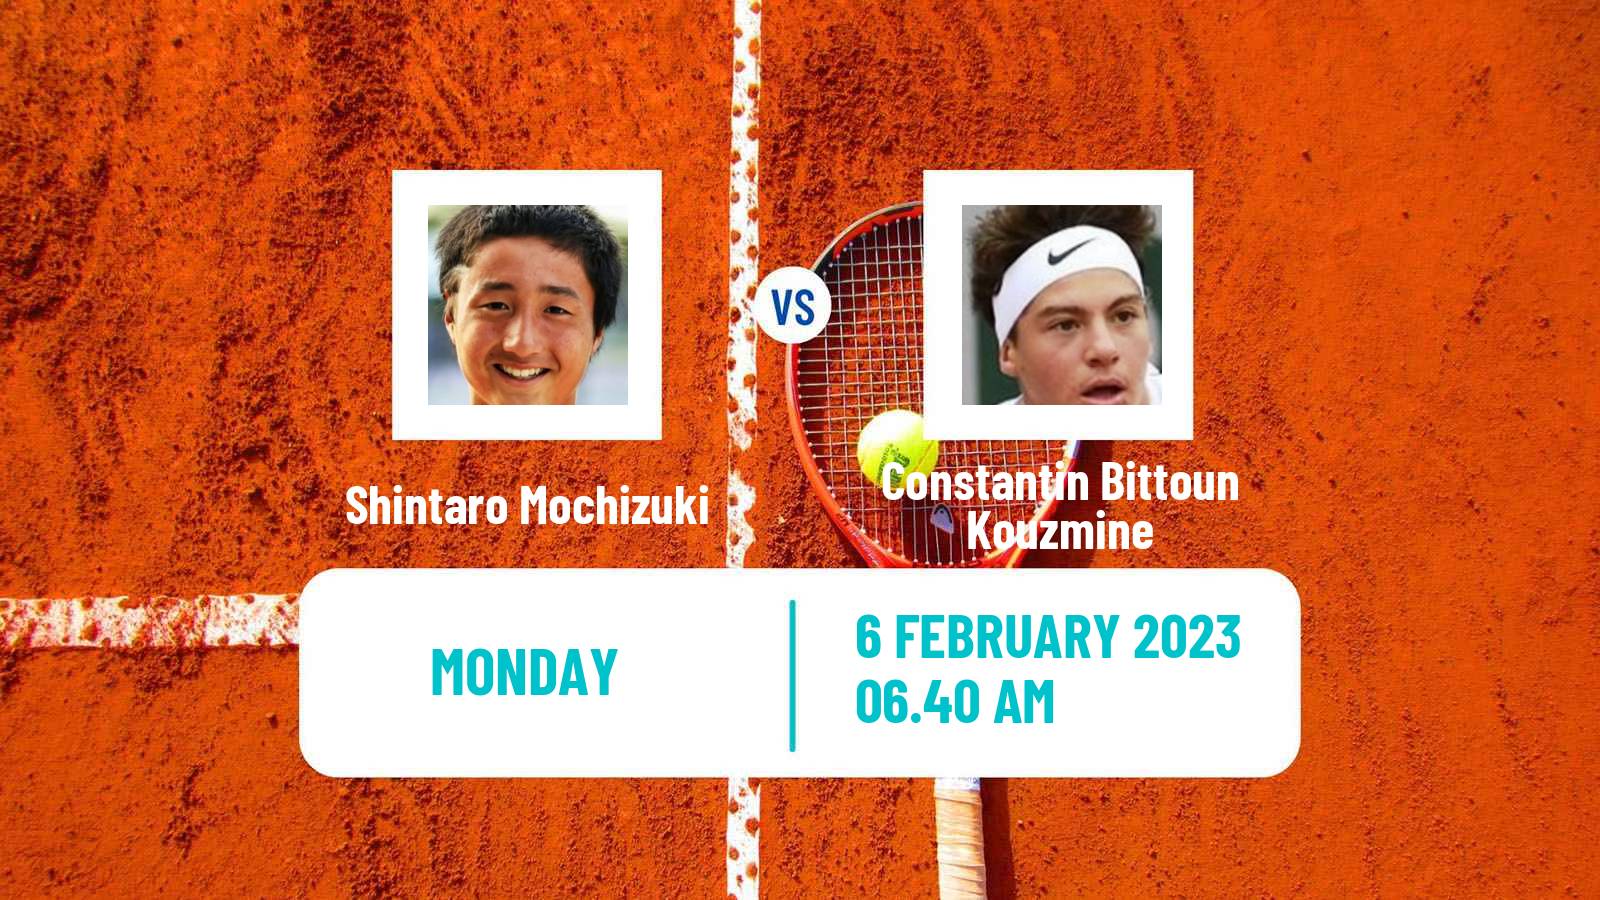 Tennis ATP Challenger Shintaro Mochizuki - Constantin Bittoun Kouzmine